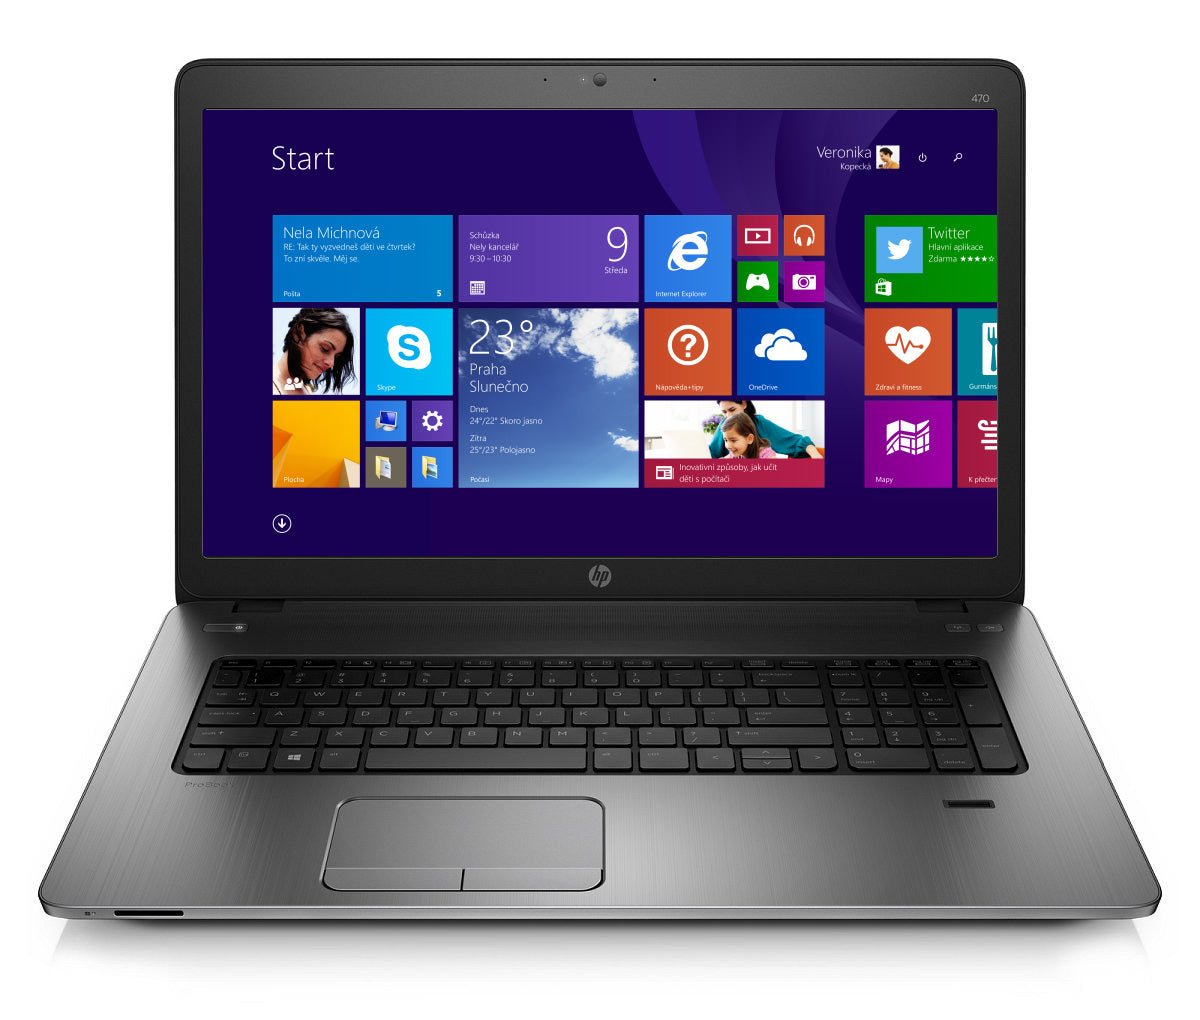 HP ProBook 470 G2 17.3" Laptop i7-5500U 500GB HDD 8GB RAM - Very Good Condition